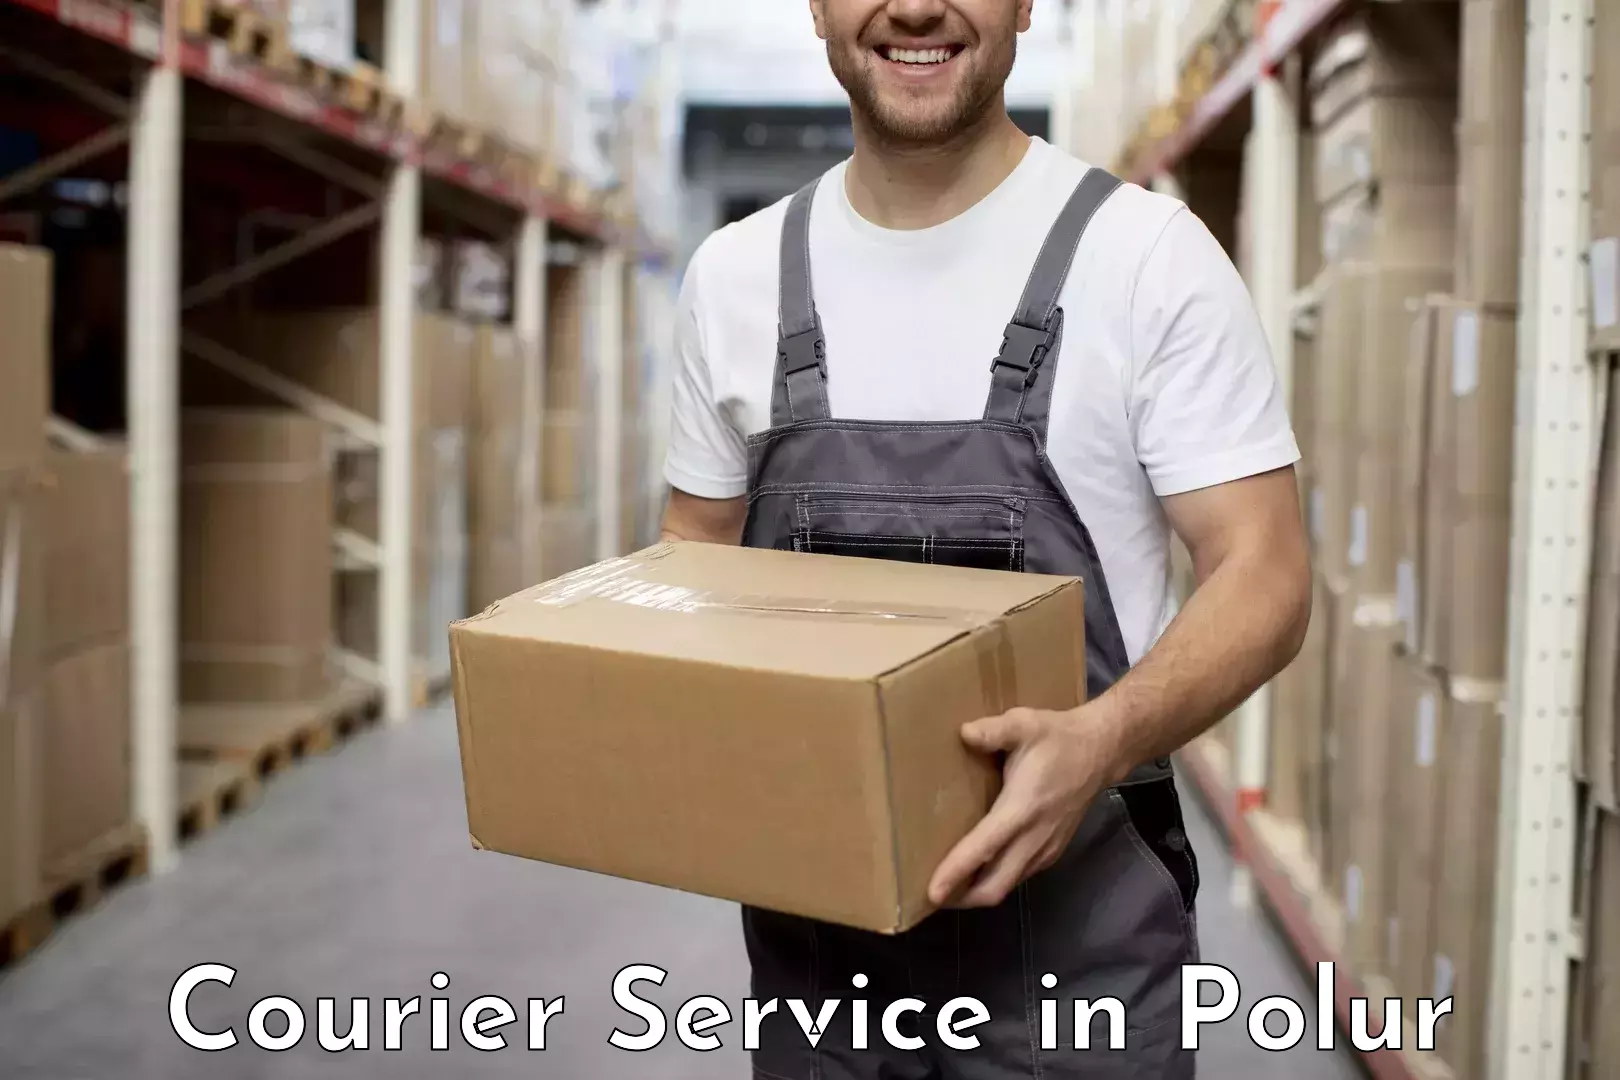 Parcel service for businesses in Polur